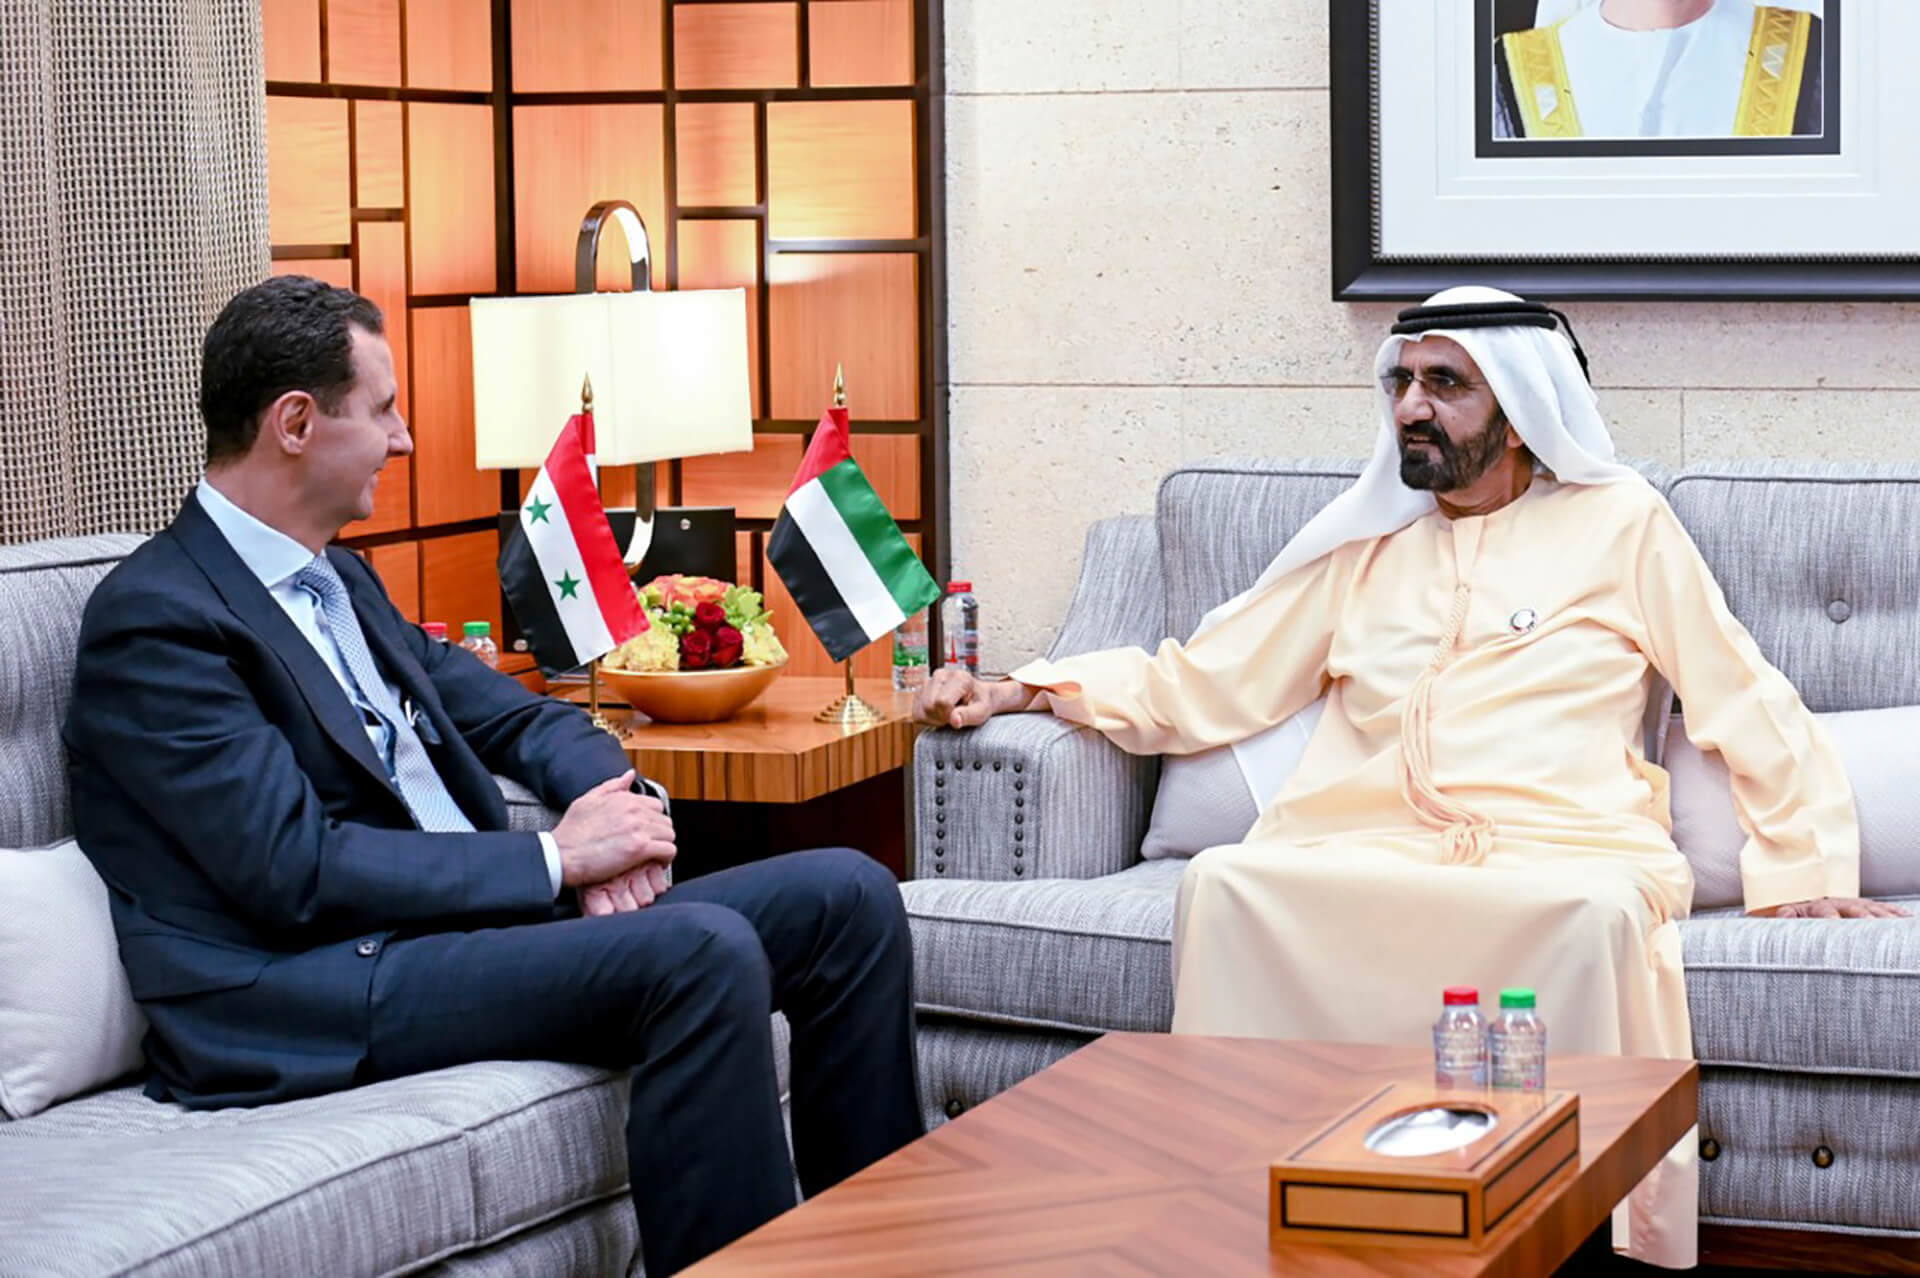 Syrian President Assad Visits UAE in First Trip Since Civil War